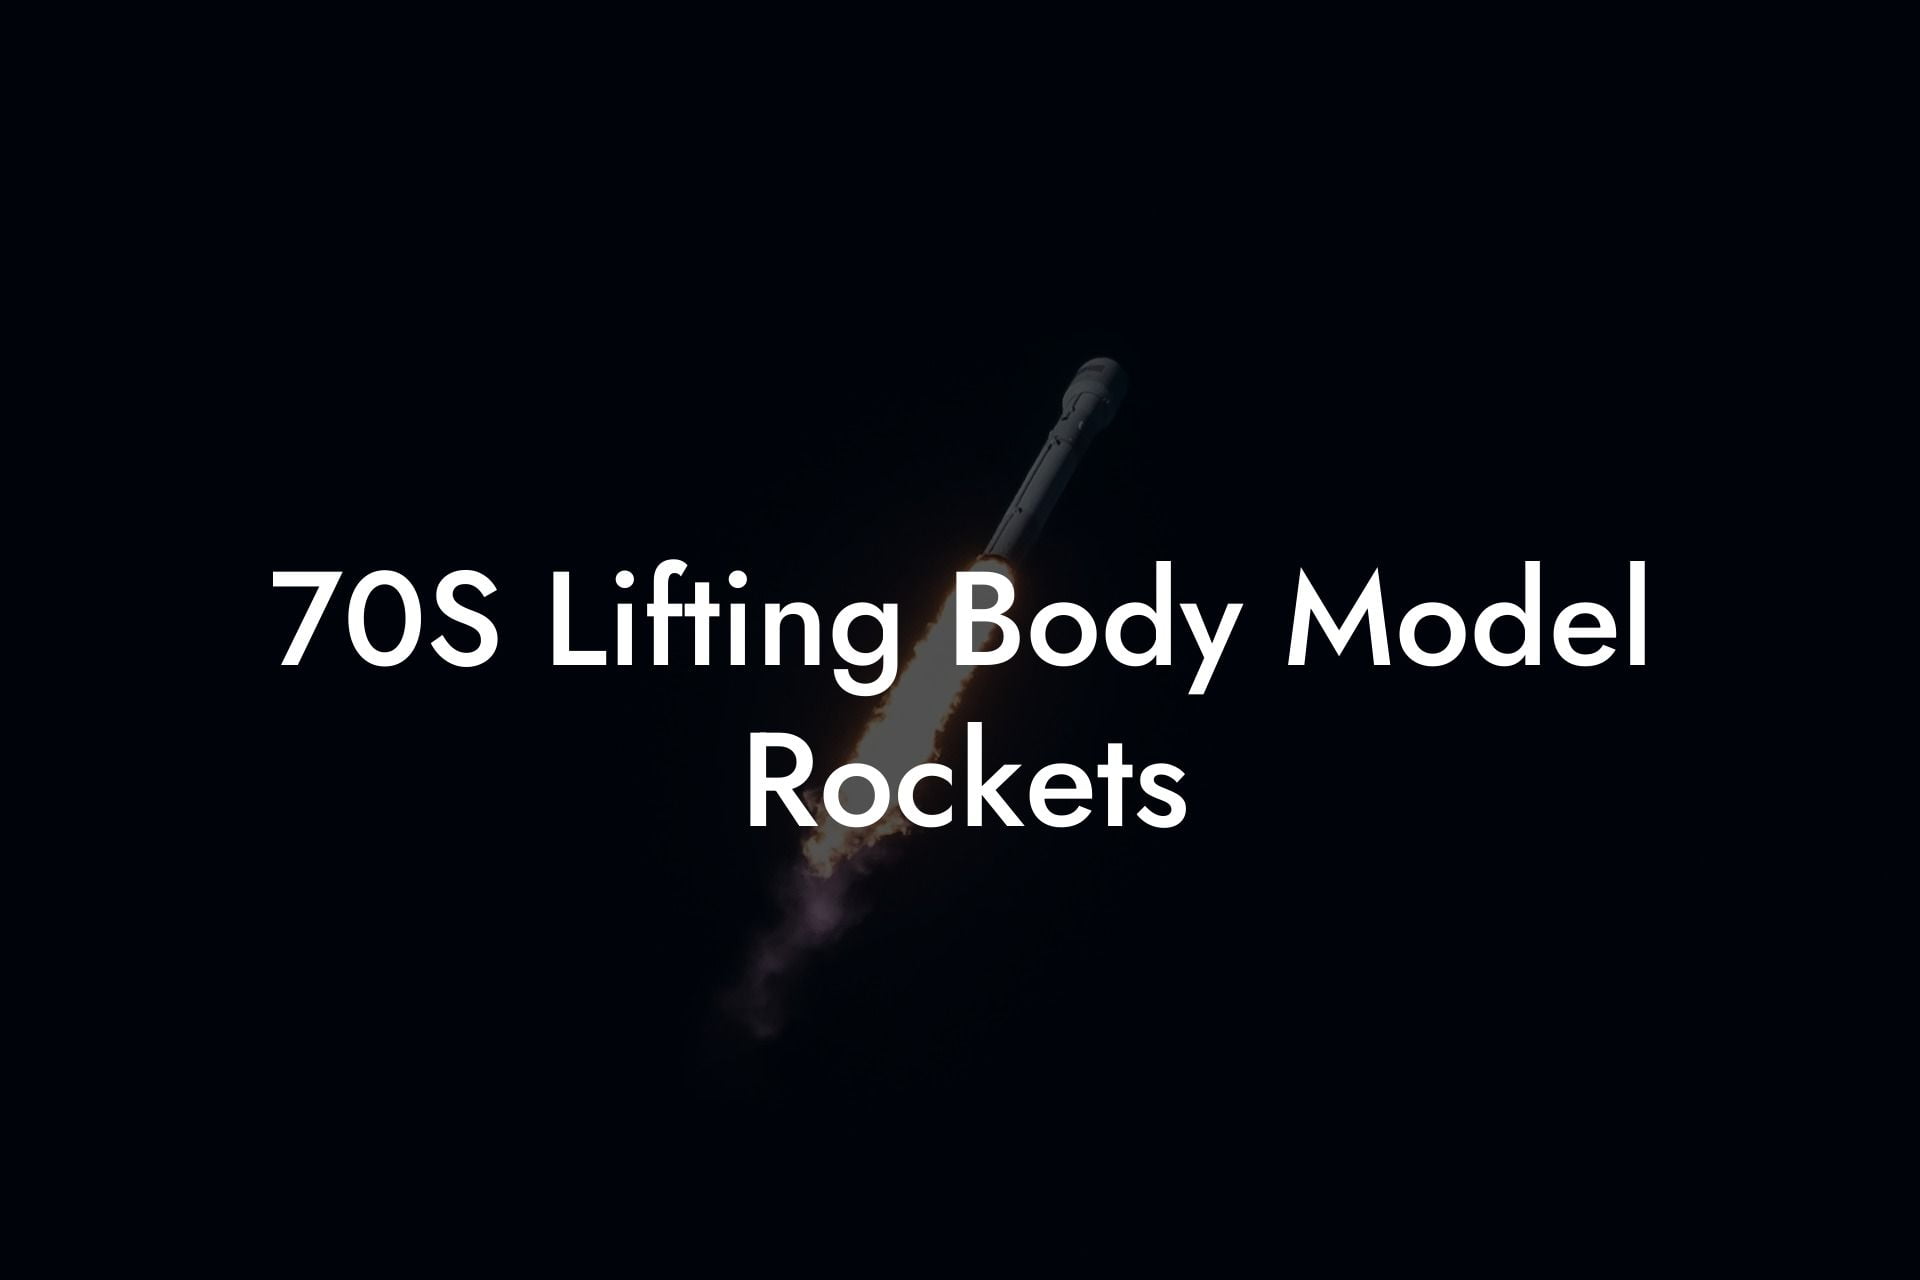 70S Lifting Body Model Rockets